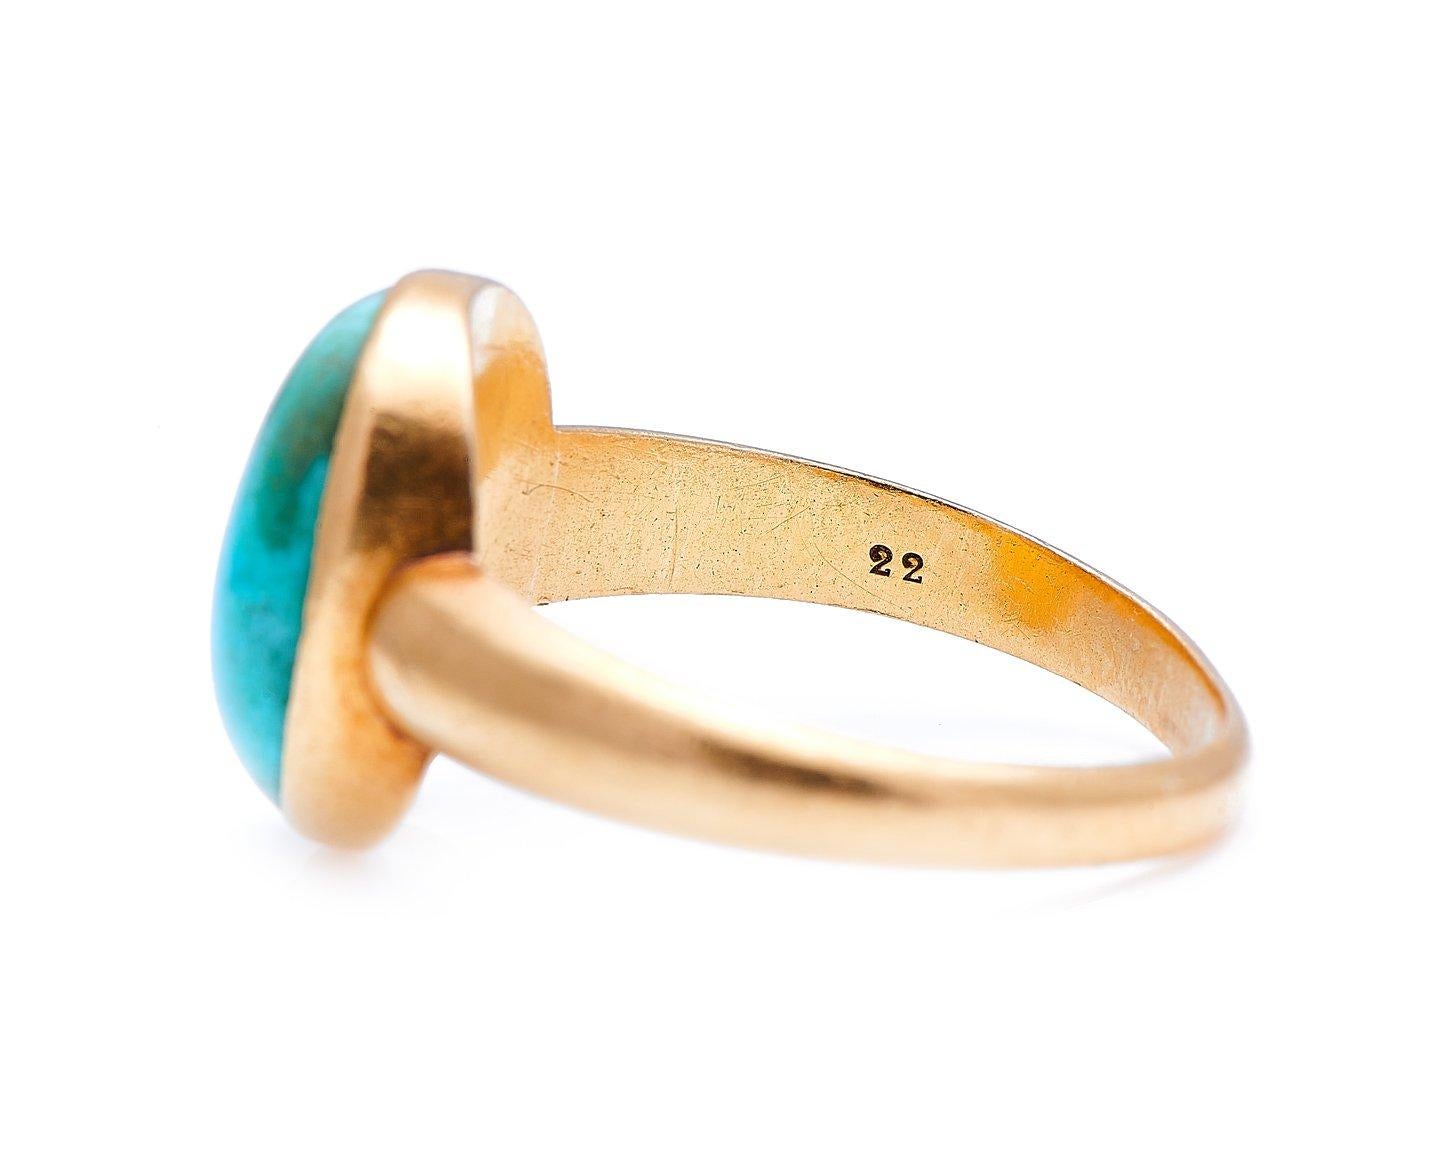 Women's Antique, Georgian, 22 Carat Gold, Natural Turquoise Signet Ring